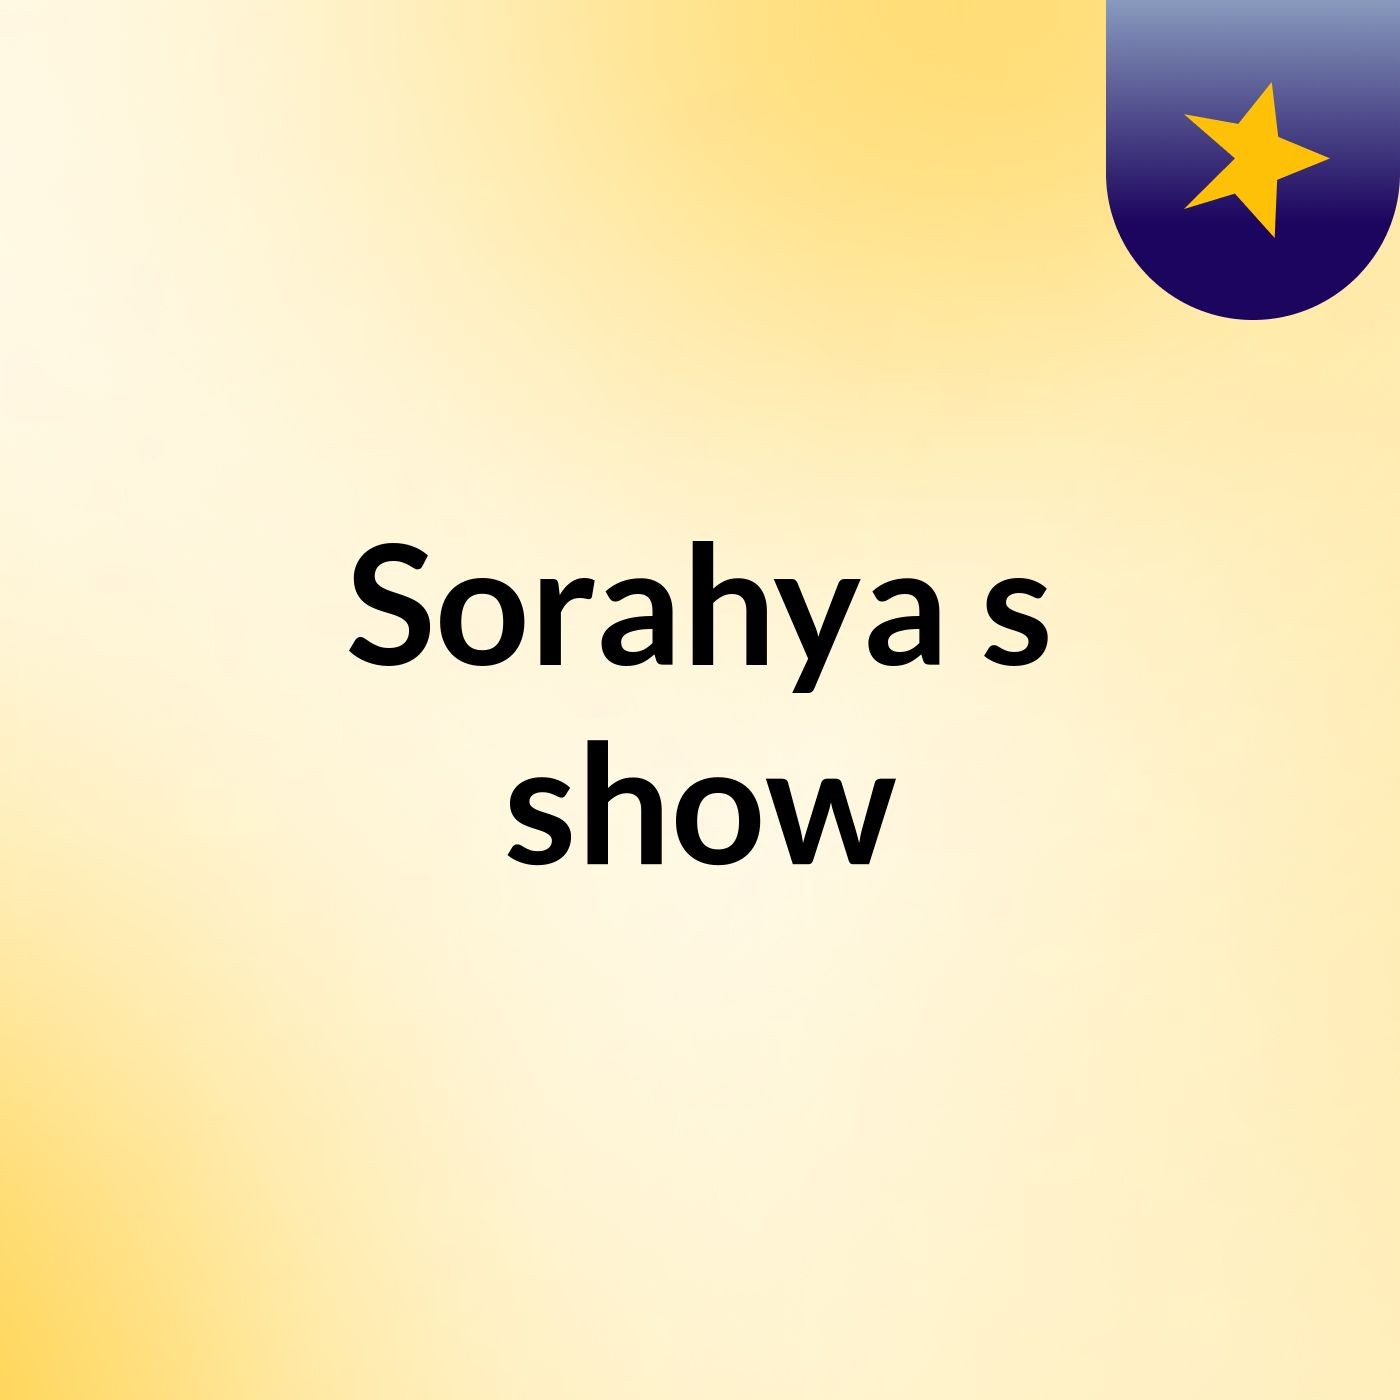 Sorahya's show